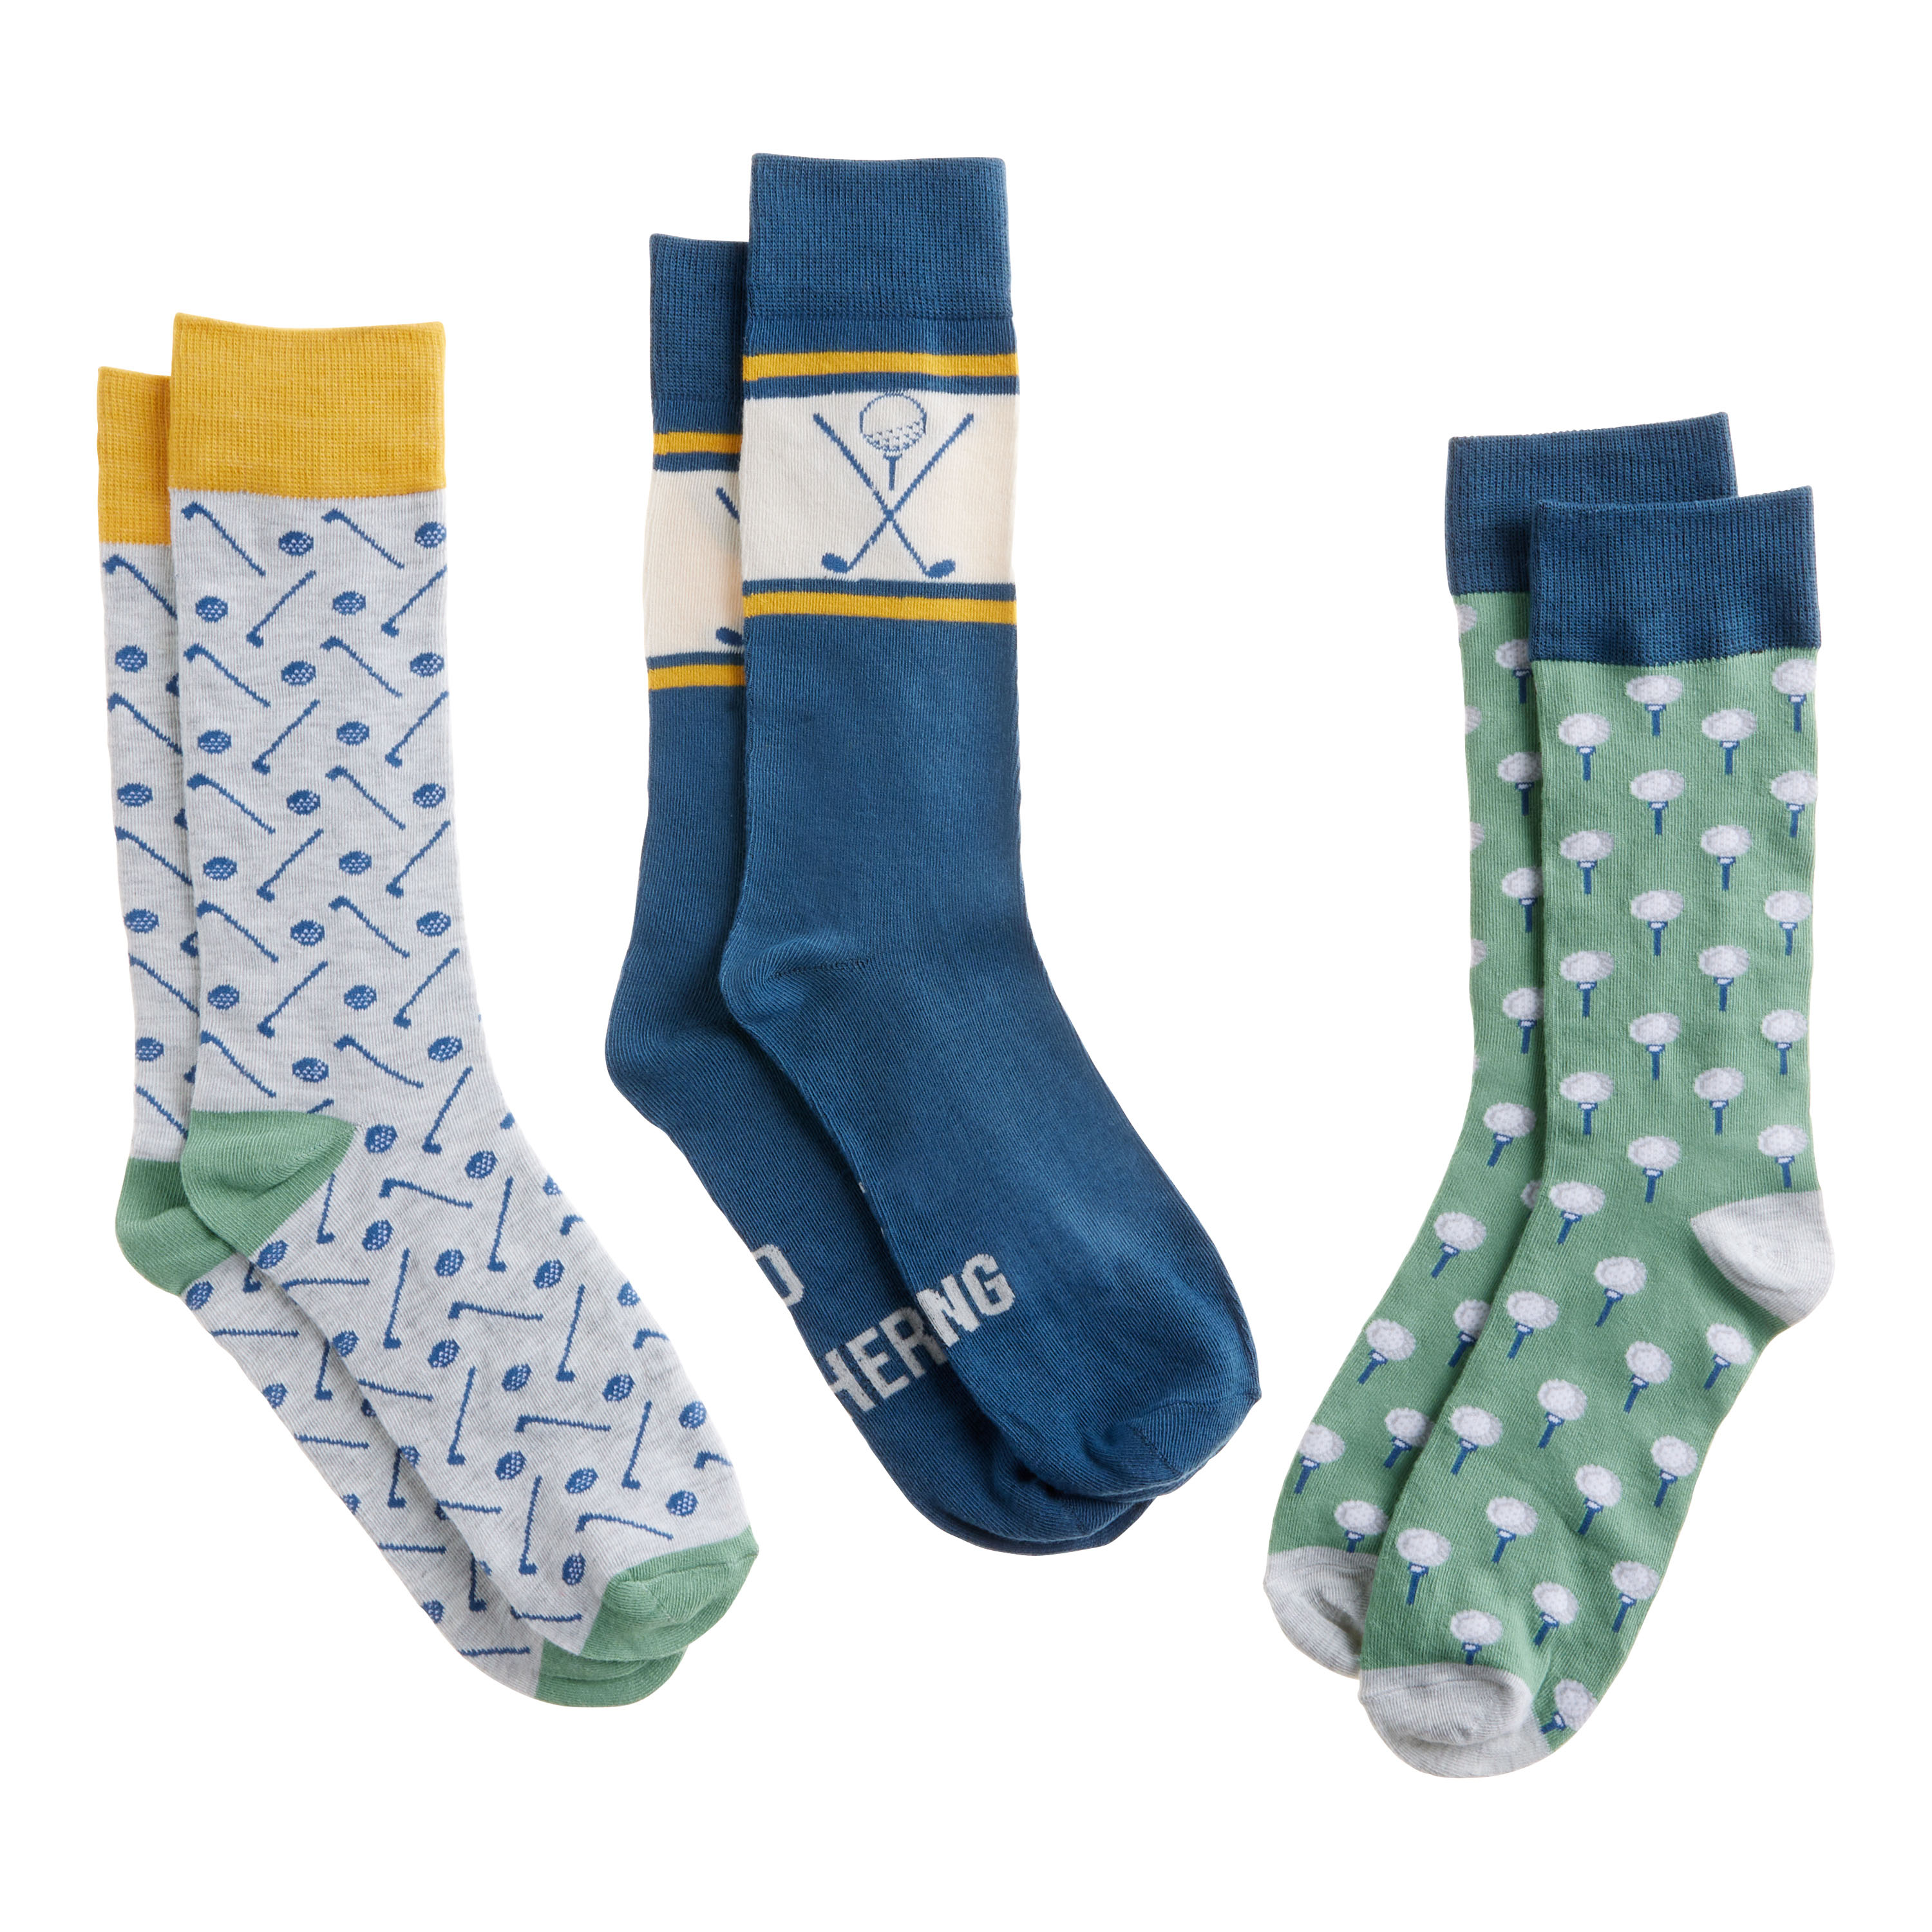 Men's Golf Socks 3 Piece Gift Set - World Market